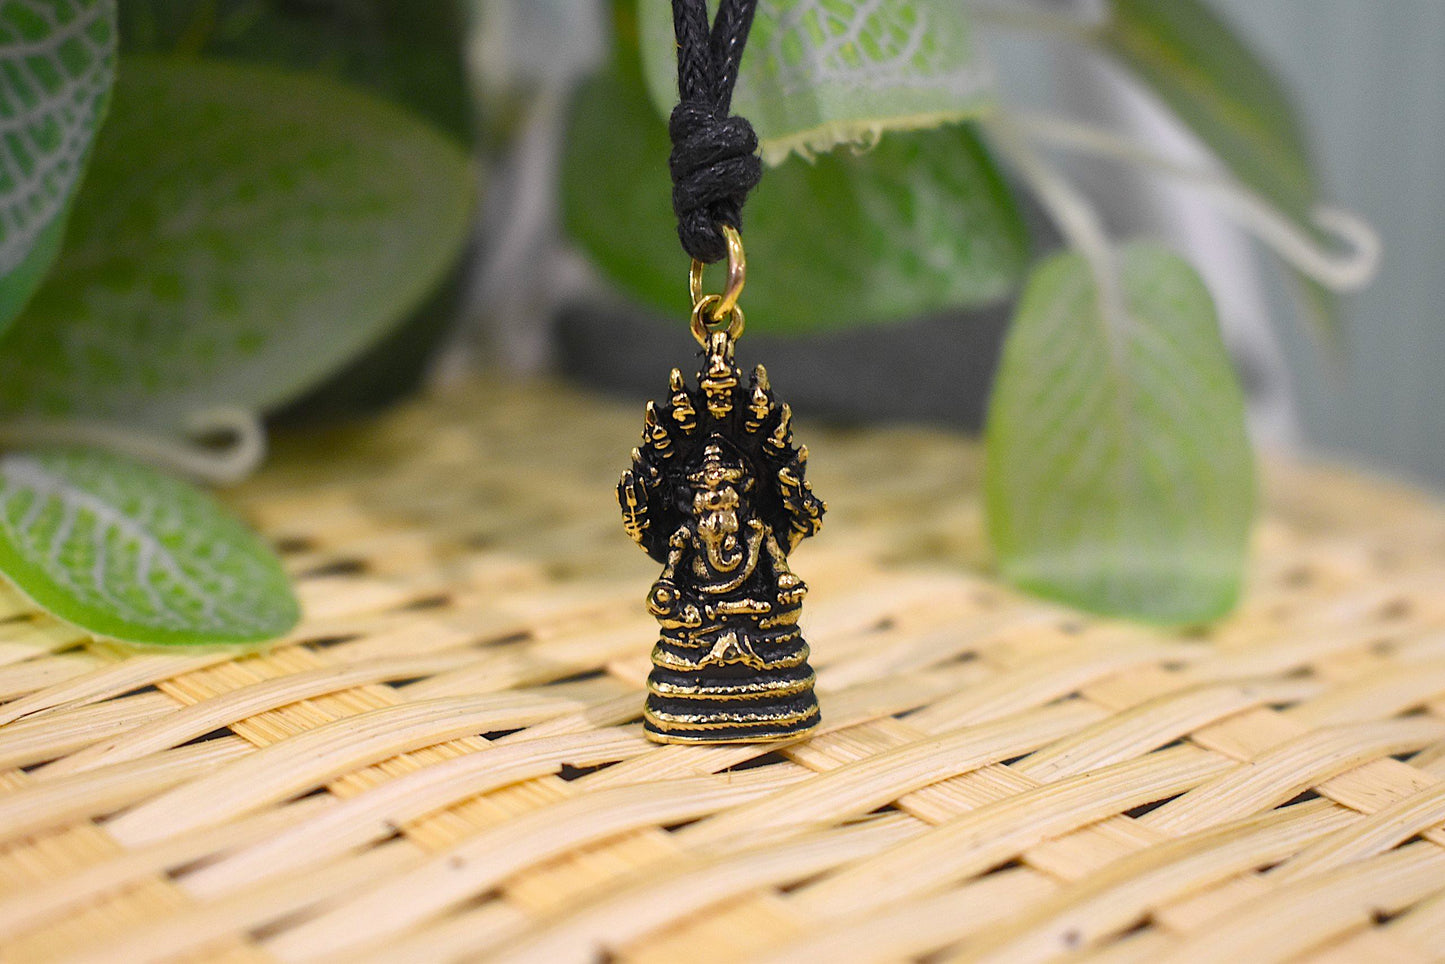 Ganesh Hindu Elephant God 92.5 Sterling Silver Brass Charm Necklace Pendant Jewelry